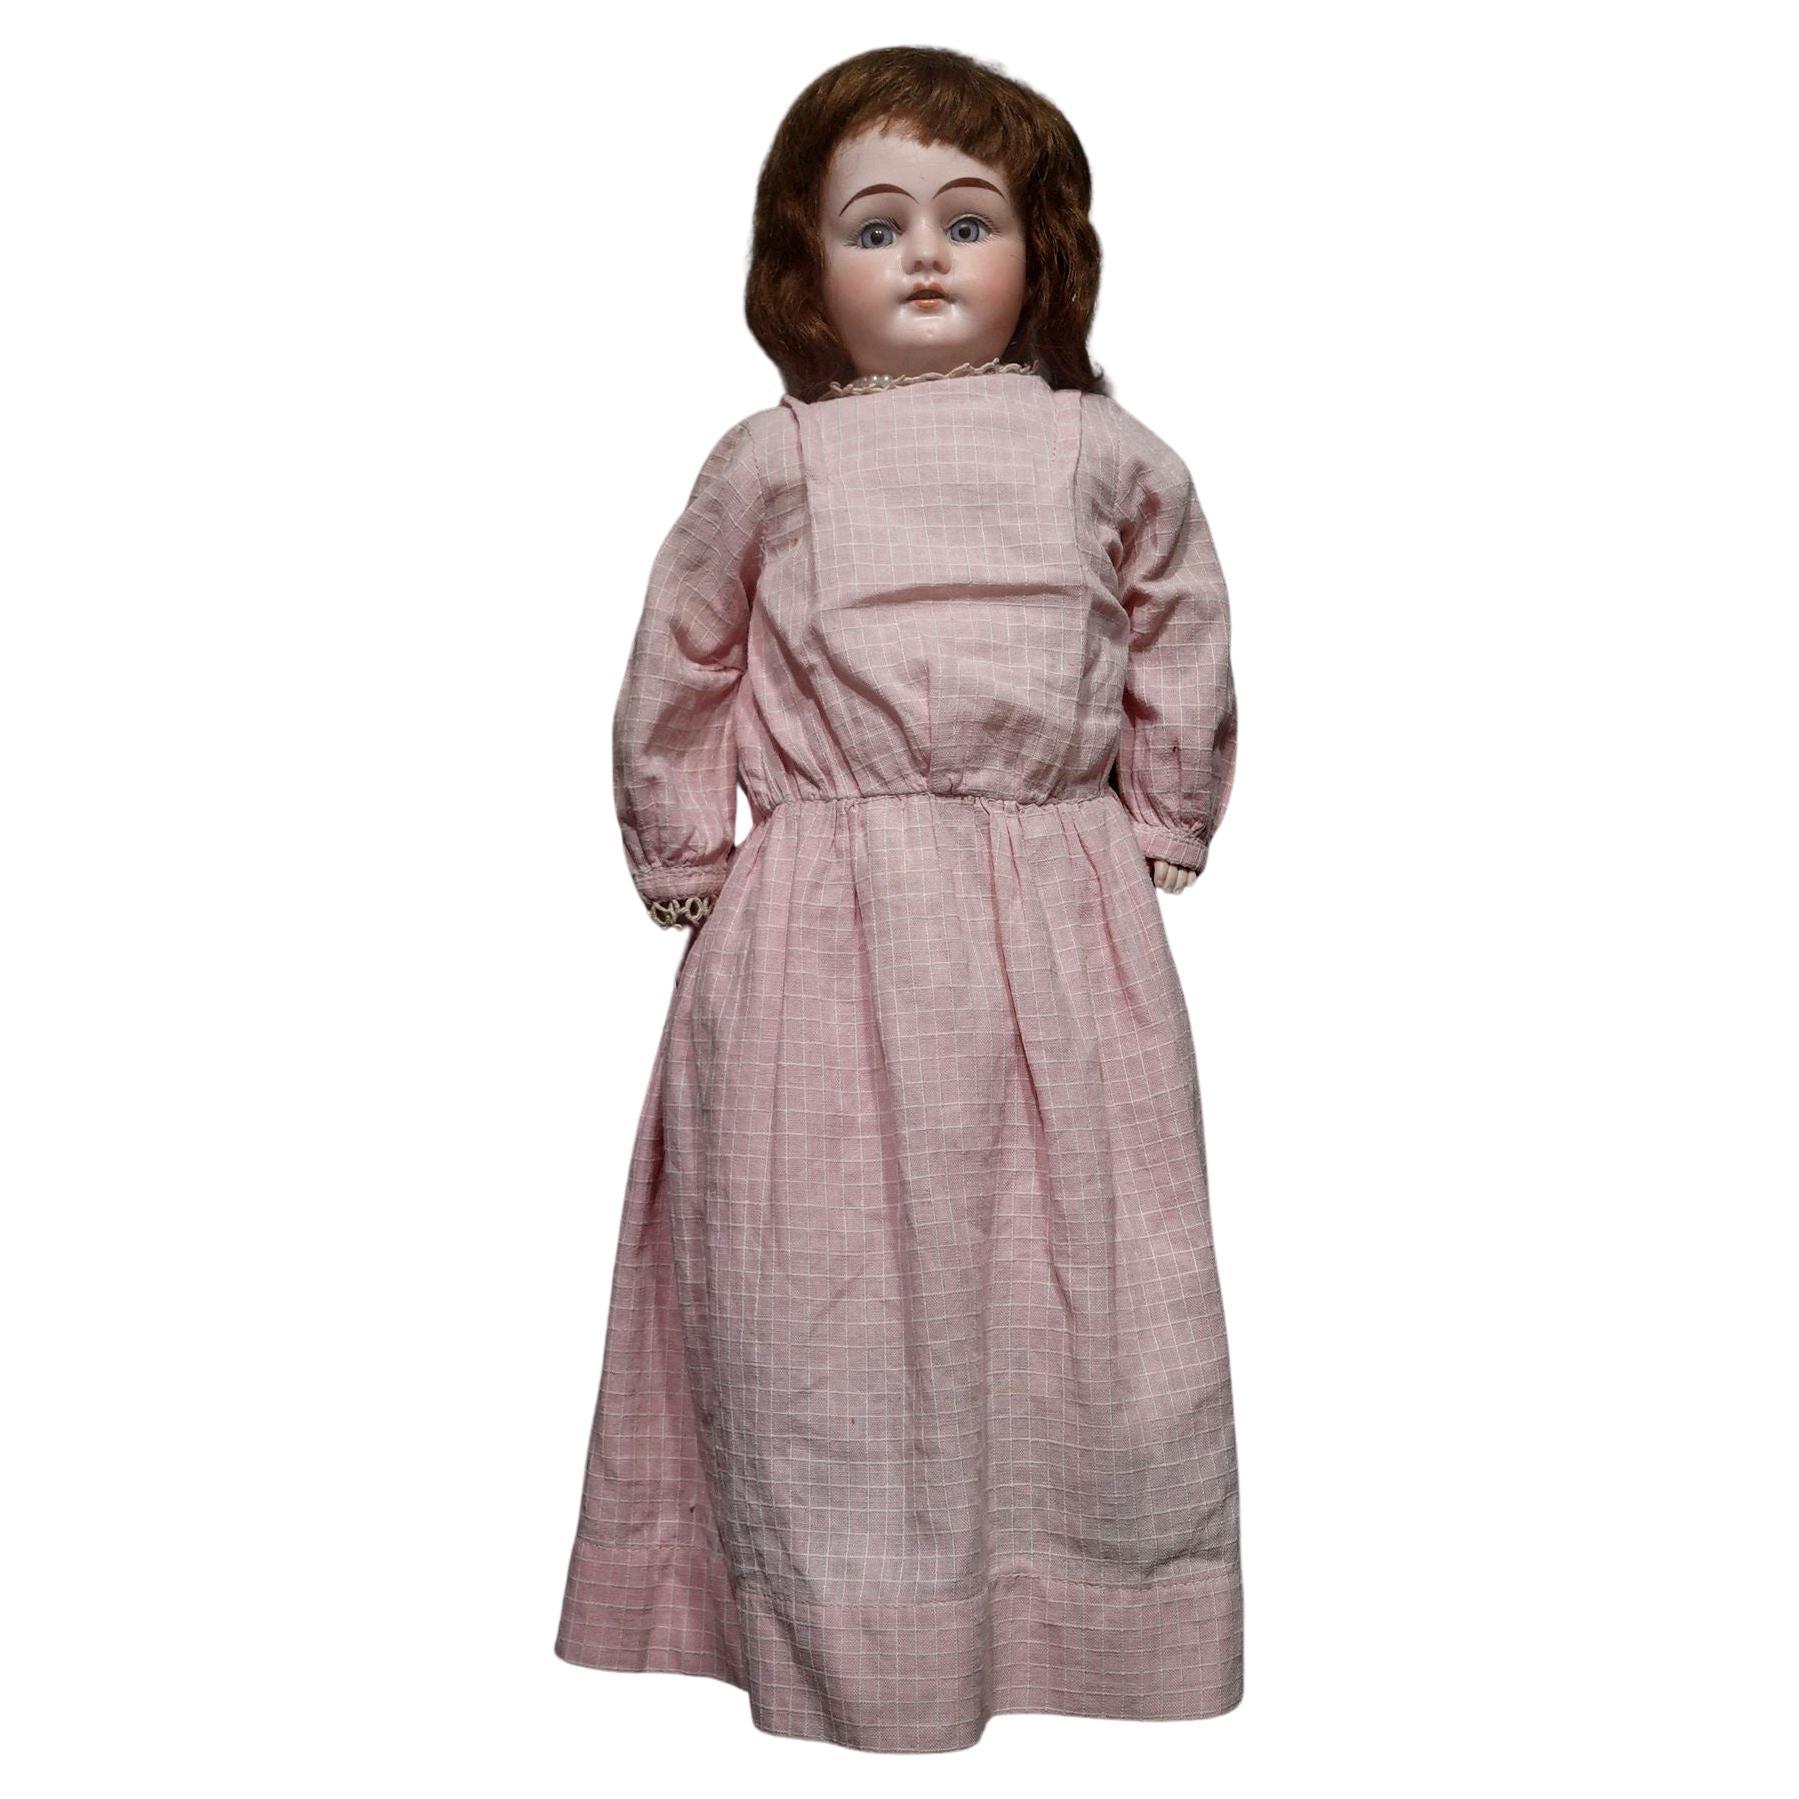 Antique German Bisque Doll A & M Armand Marseille, Ric#006 For Sale